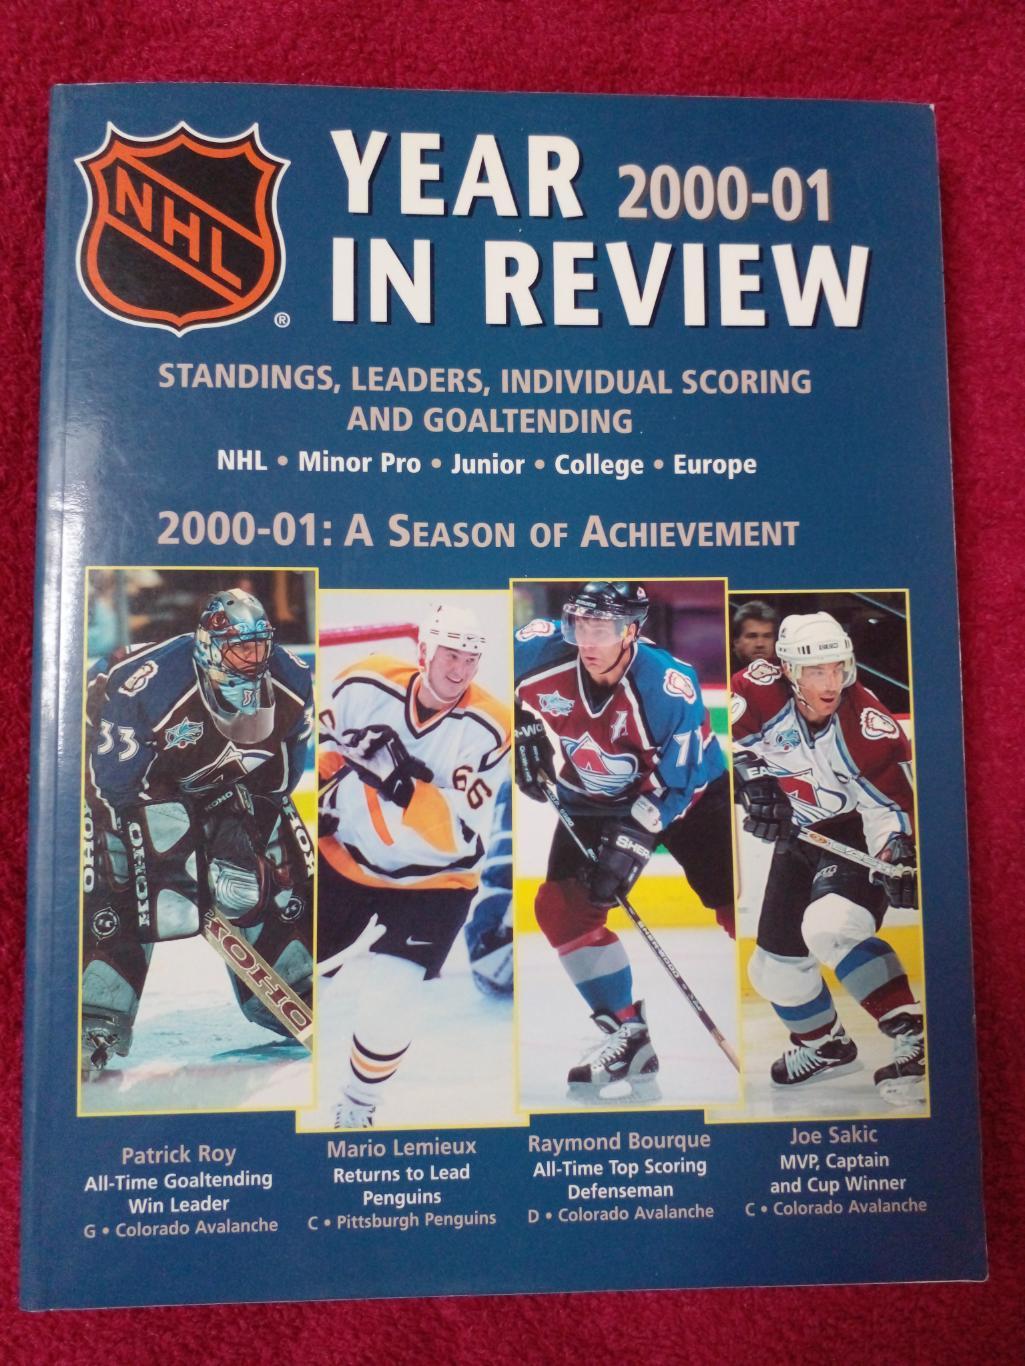 Хоккей. Справочник YEAR 2000-01 IN REVIEW. НХЛ, Юниоры, ЕВРОПА итд.